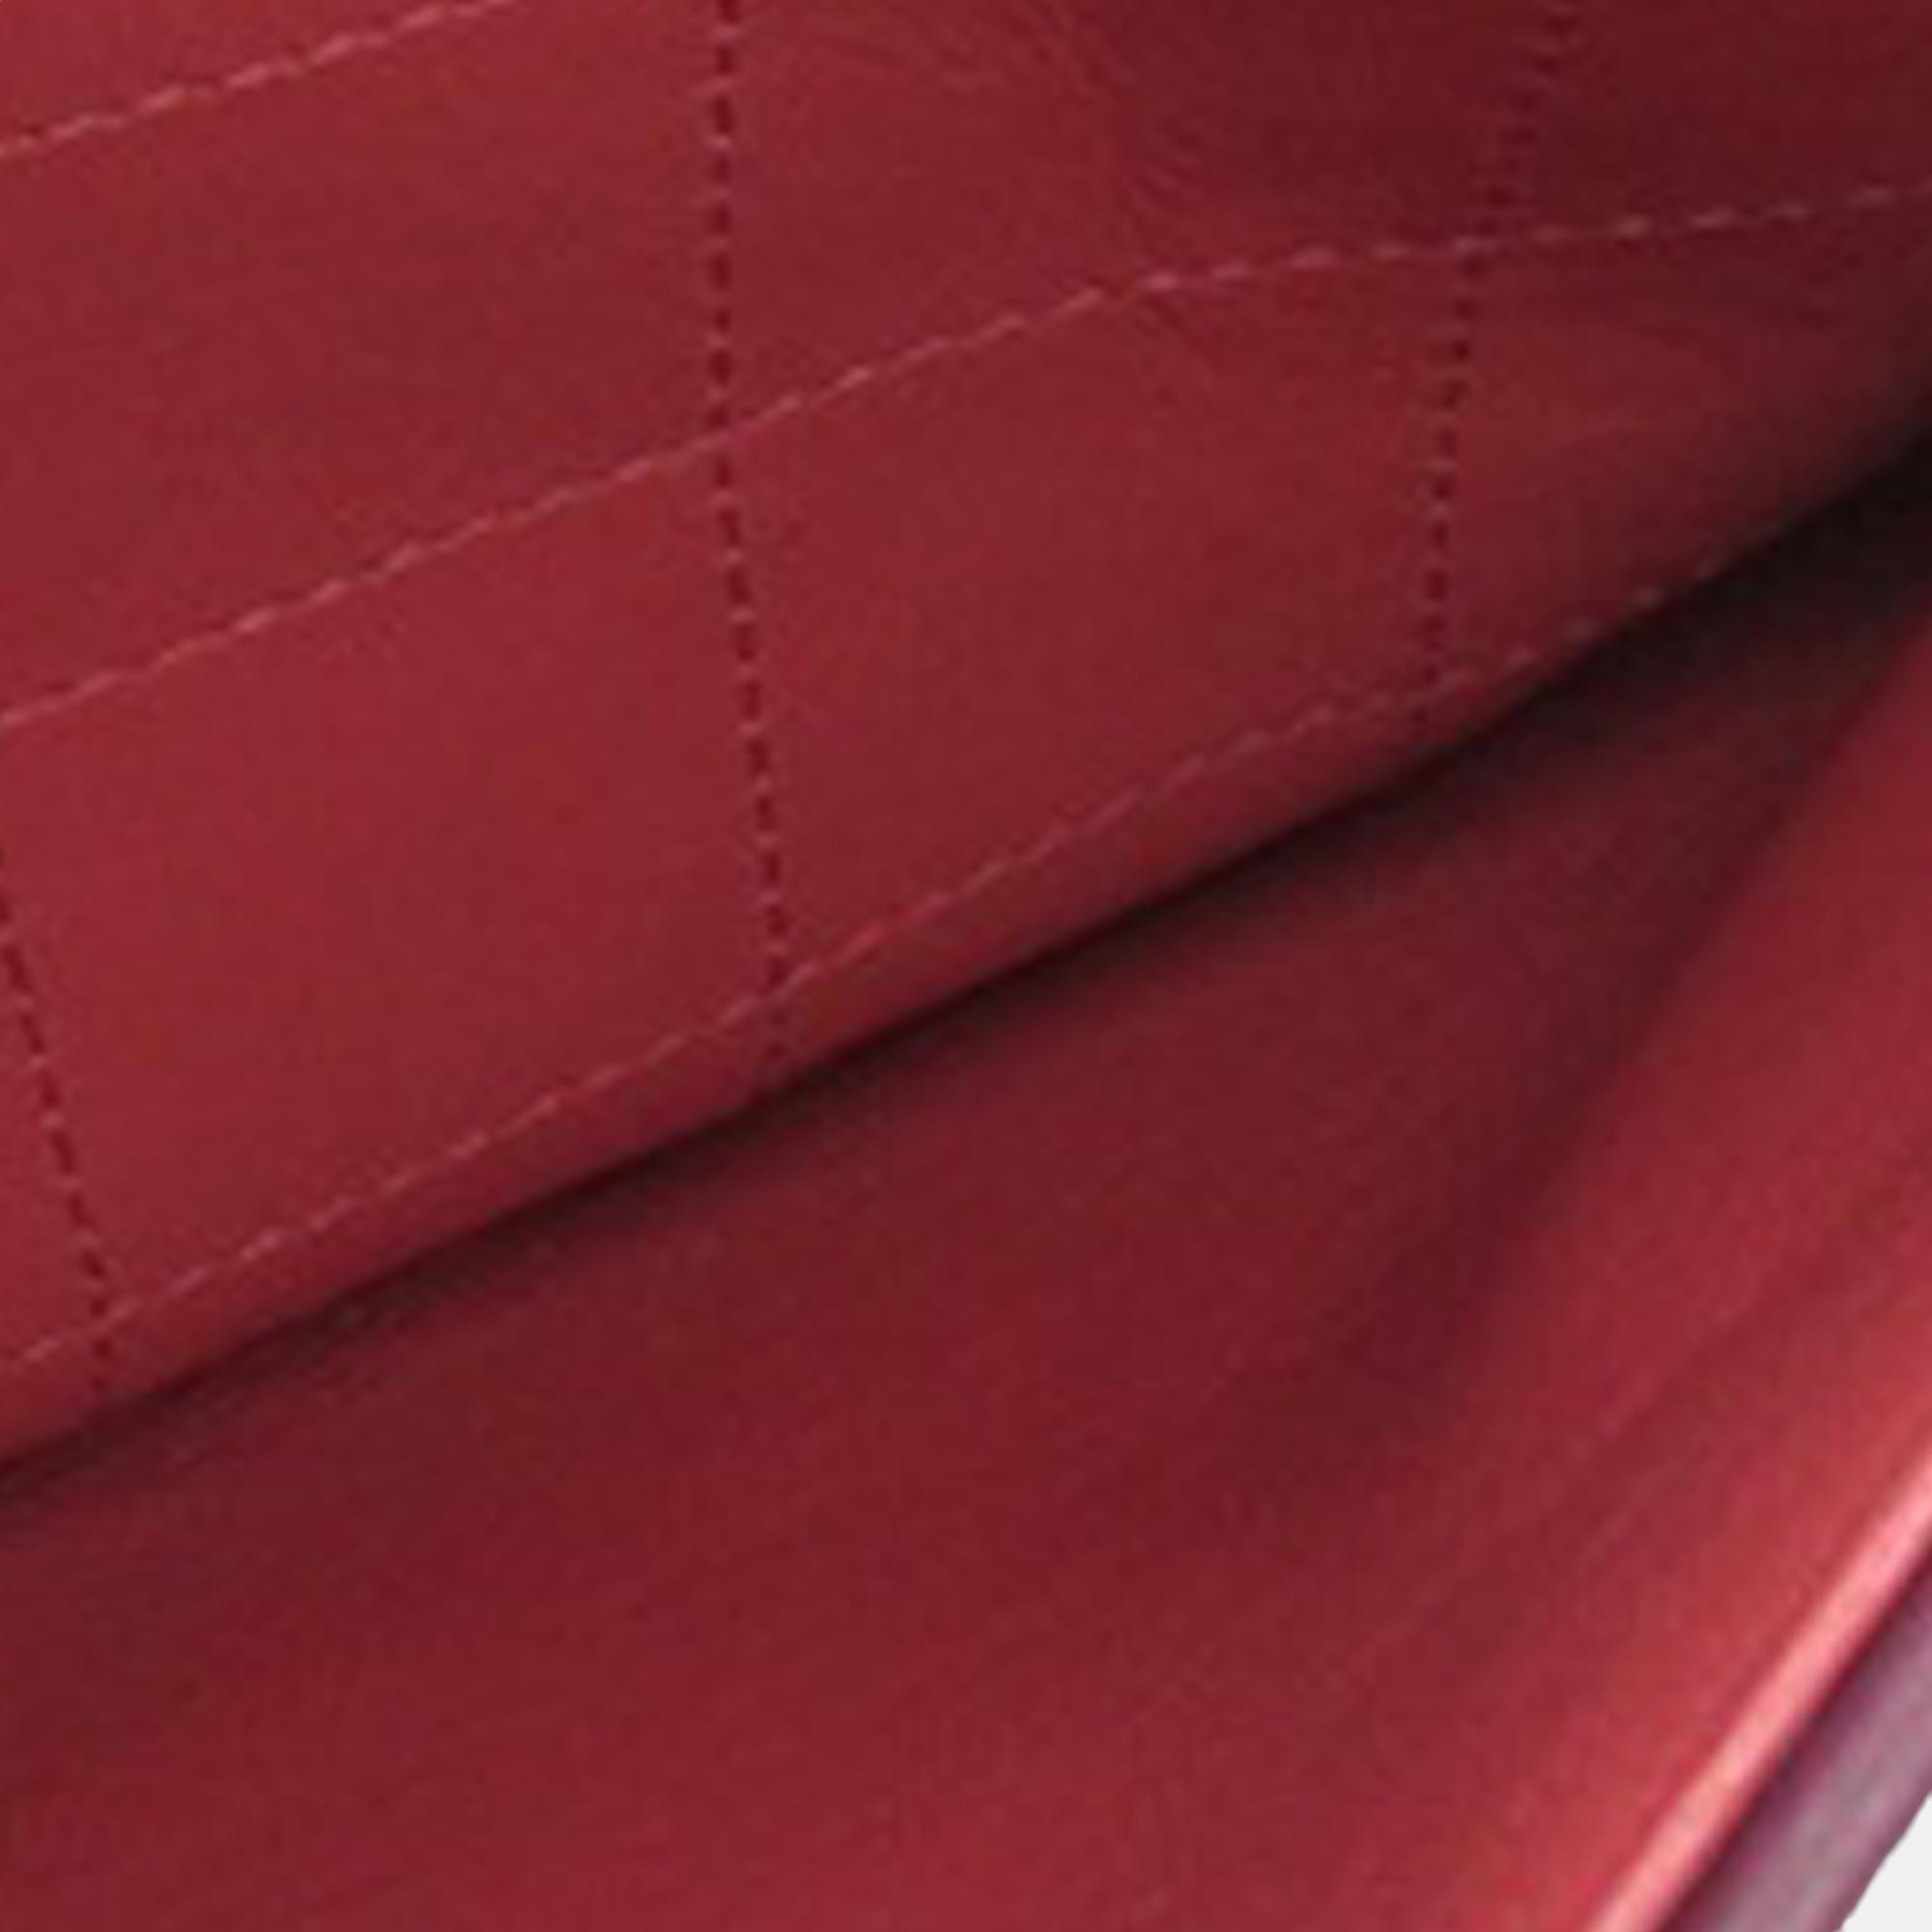 Chanel Red Mademoiselle Jacket Bag